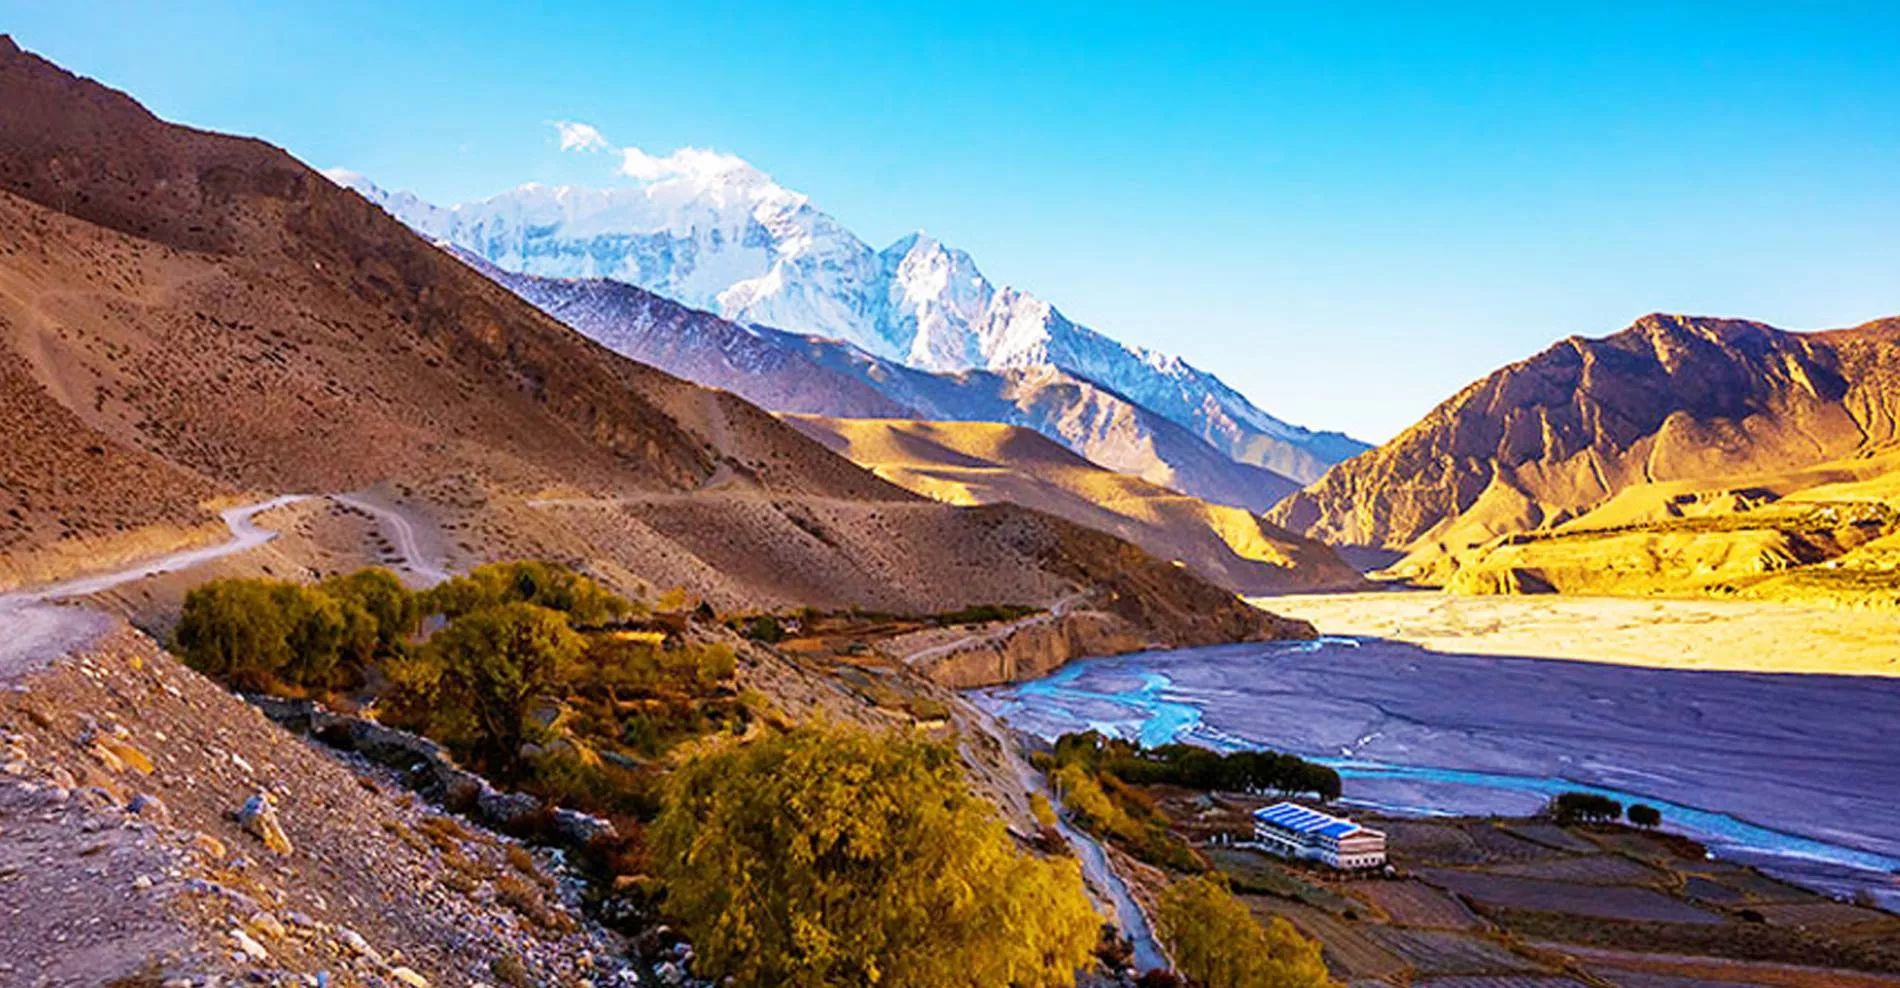 Upper Mustang Trek in Nepal, Central Asia | Trekking & Hiking - Rated 0.9